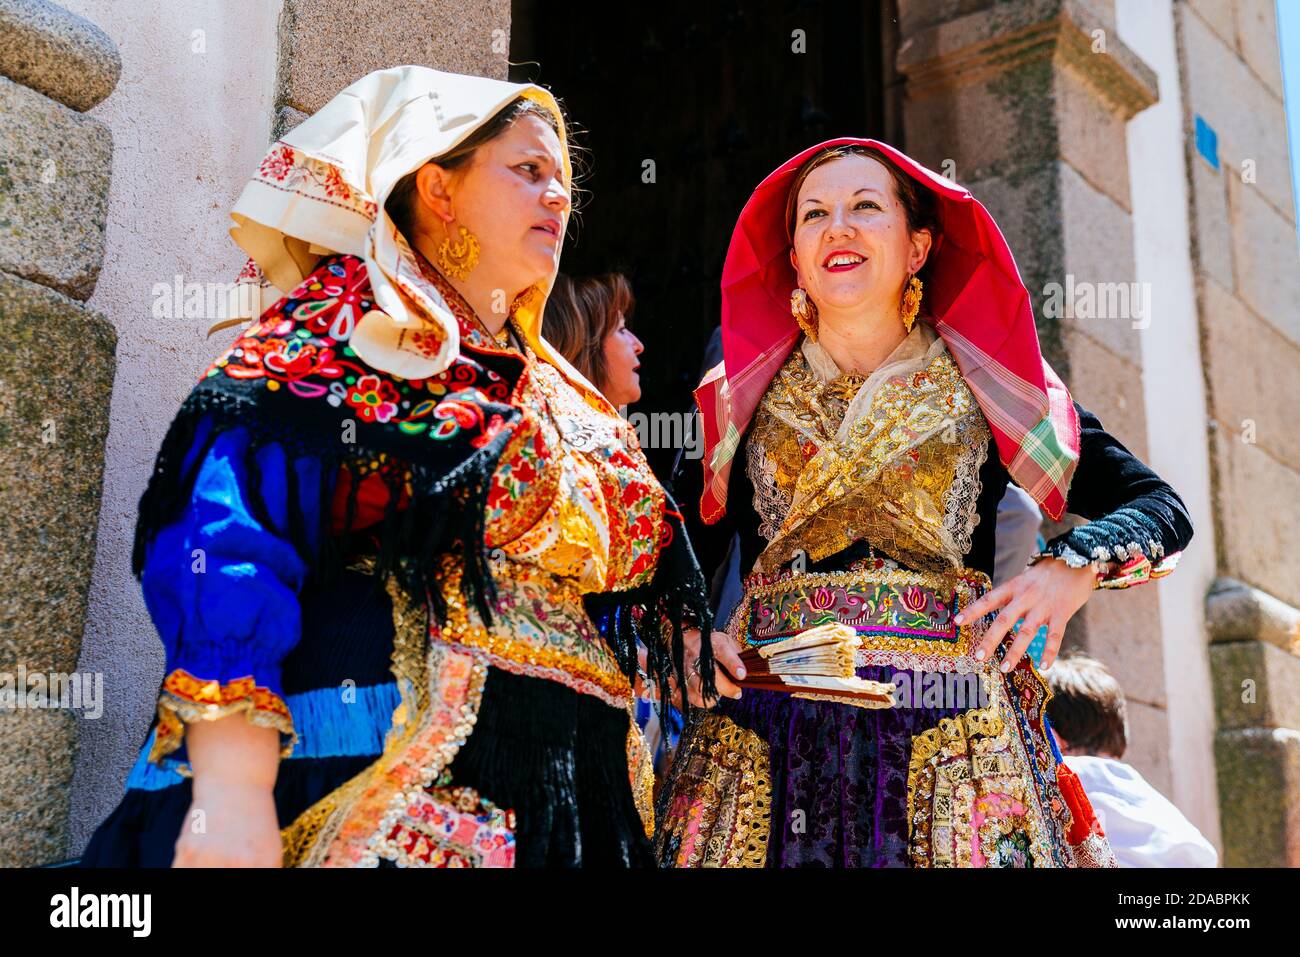 Woman dressed in clothing typical of Lagartera. Lagartera, Toledo, Castilla - La Mancha, Spain, Europe Stock Photo